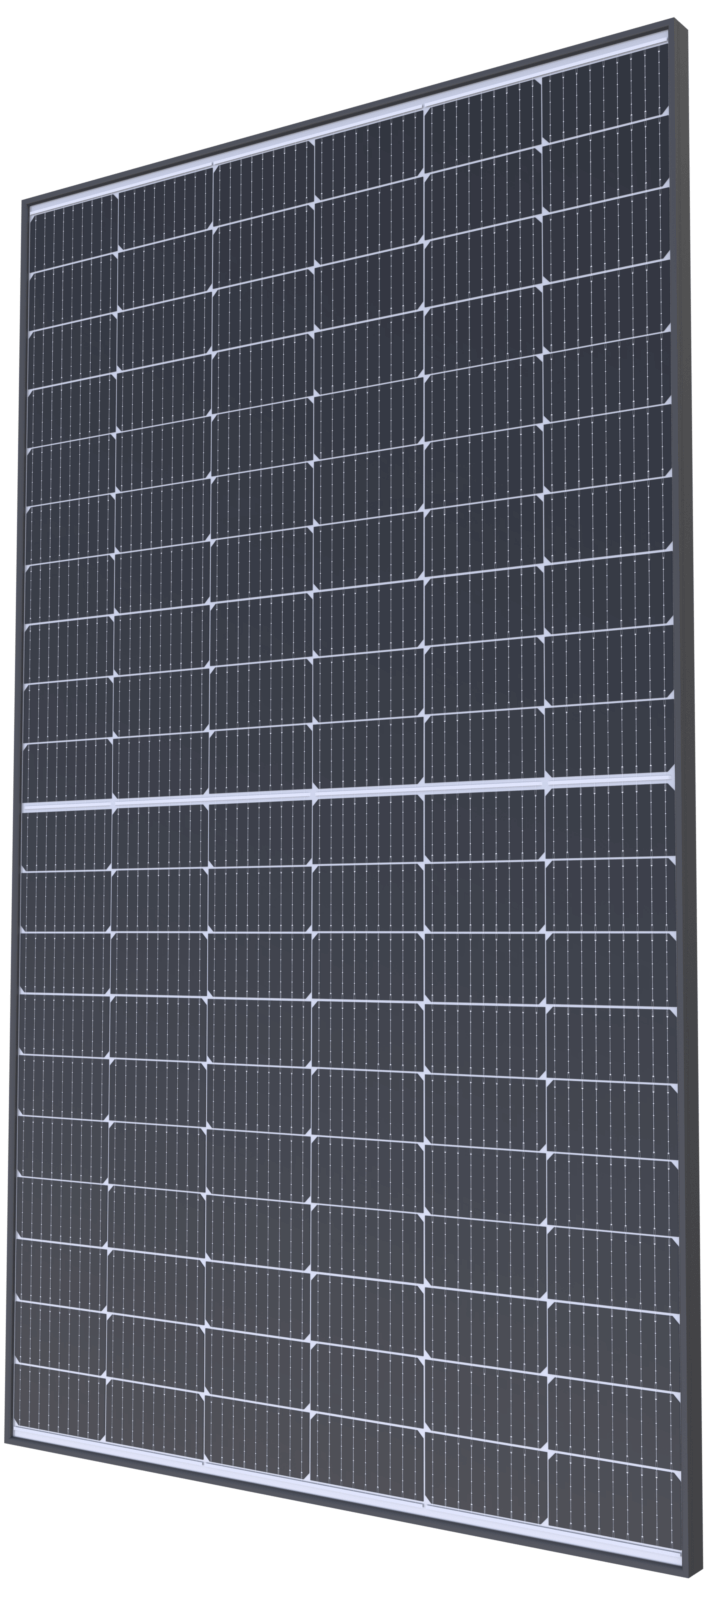 Image 2 Boviet Solar Pv Module Vega Series Mono Bifacial C I 360 375 Side View Photo